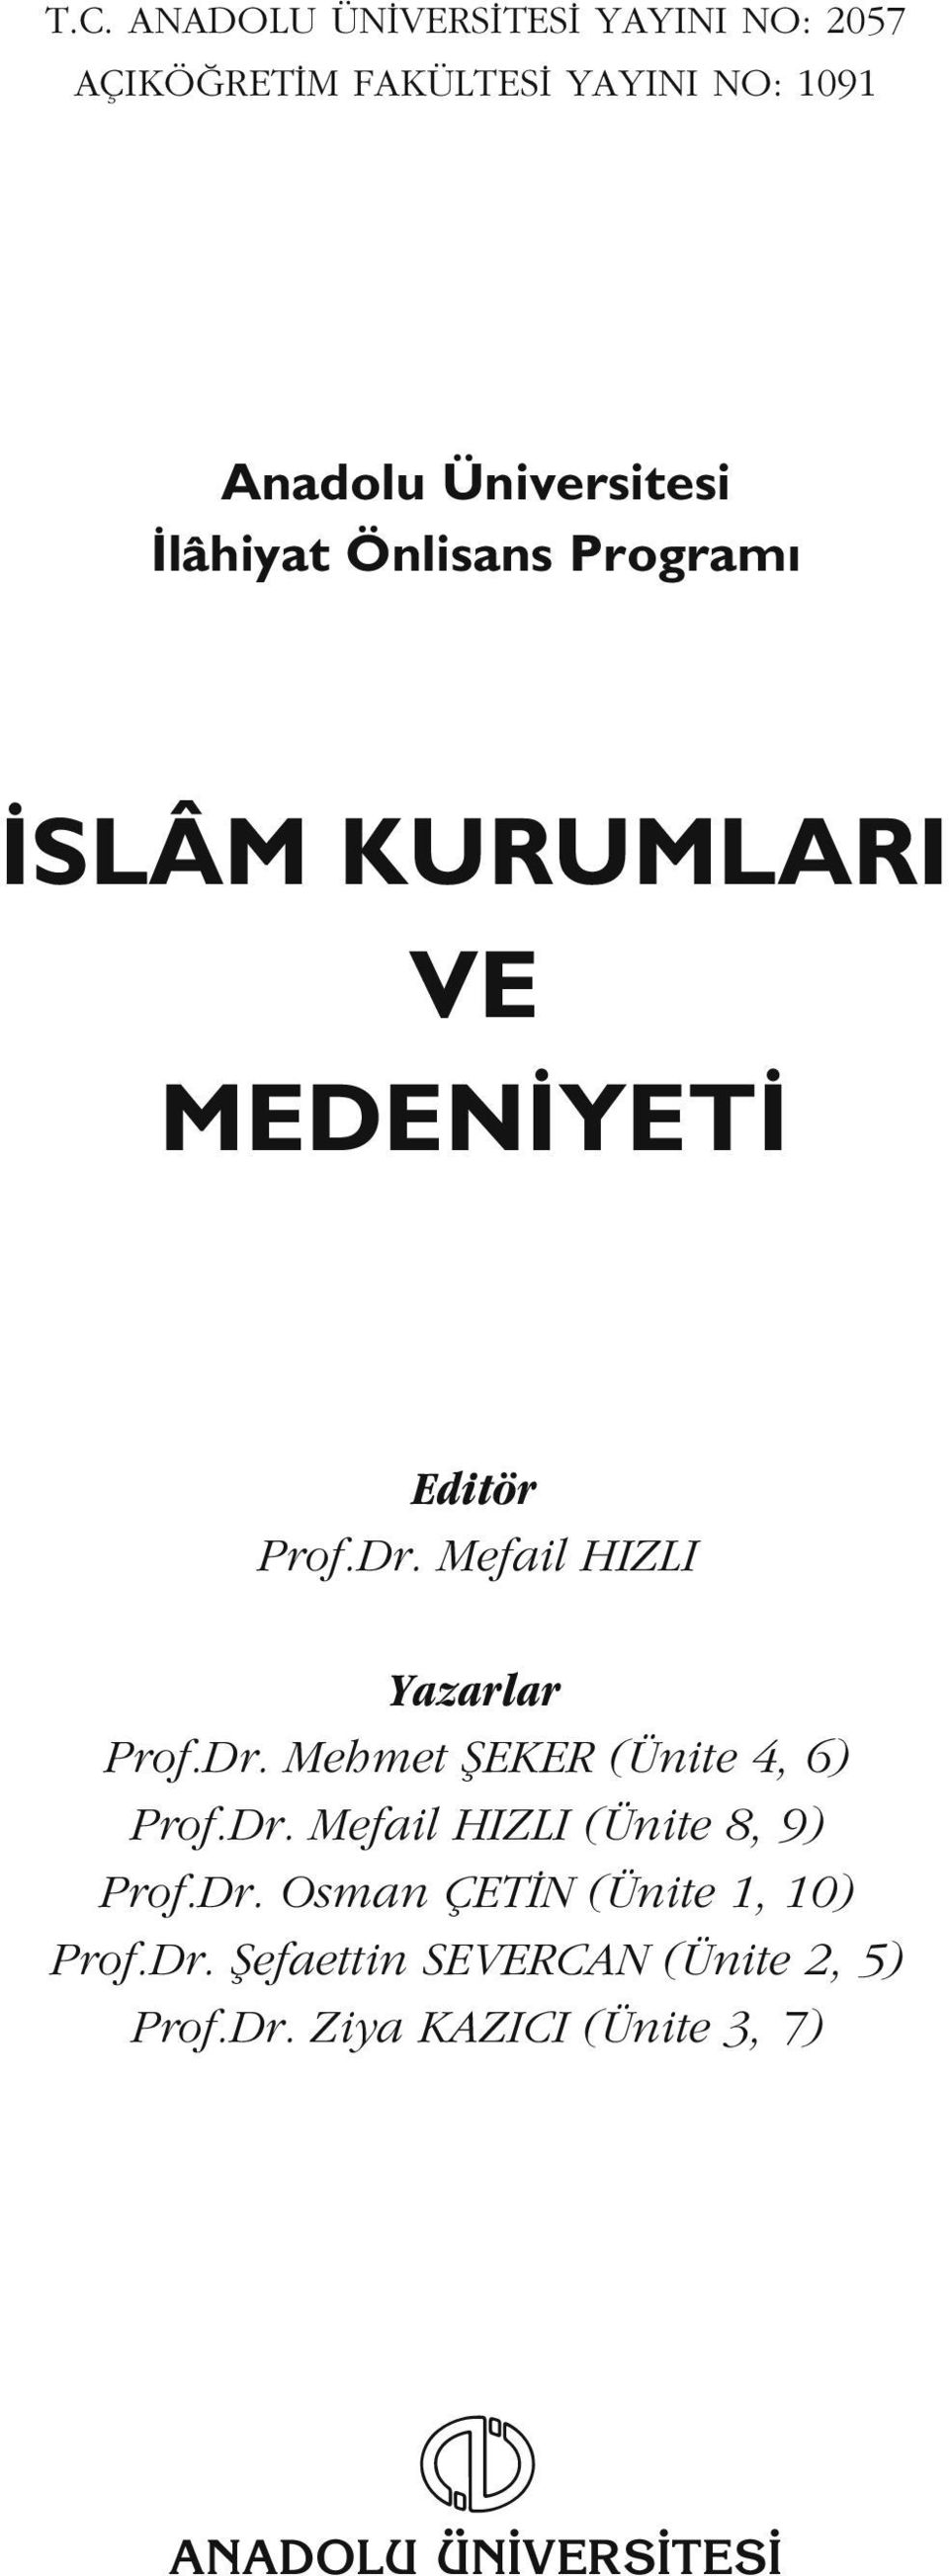 Mefail HIZLI Yazarlar Prof.Dr. Mehmet fieker (Ünite 4, 6) Prof.Dr. Mefail HIZLI (Ünite 8, 9) Prof.